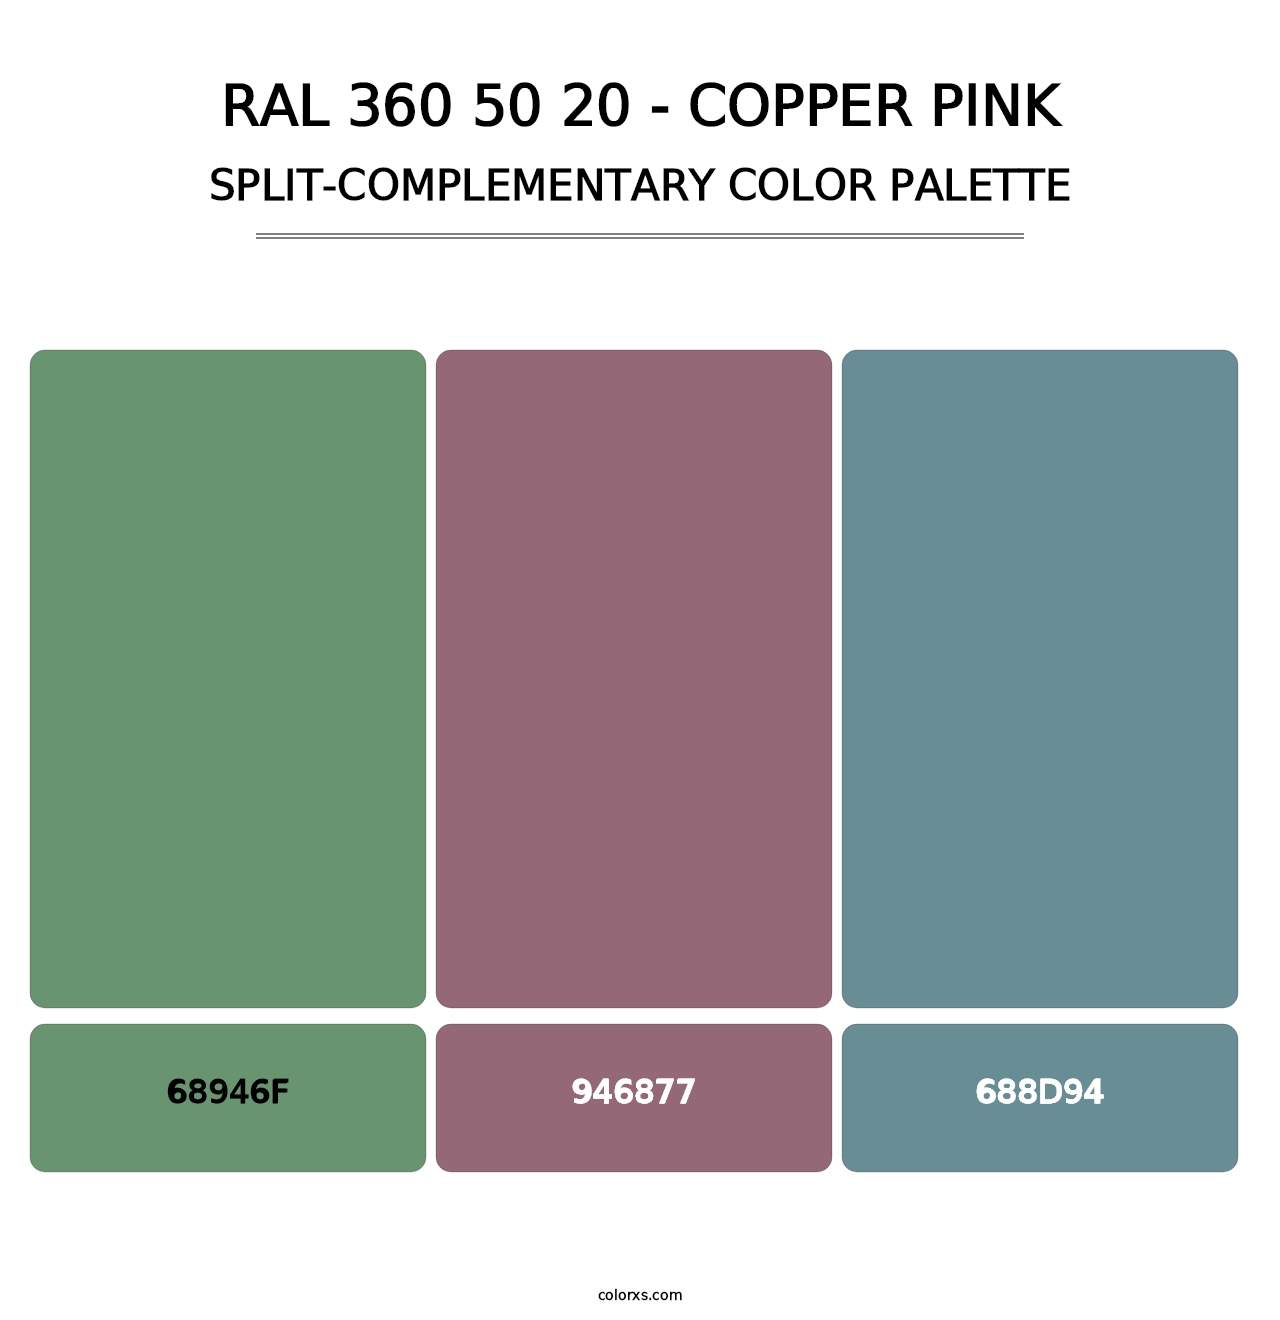 RAL 360 50 20 - Copper Pink - Split-Complementary Color Palette